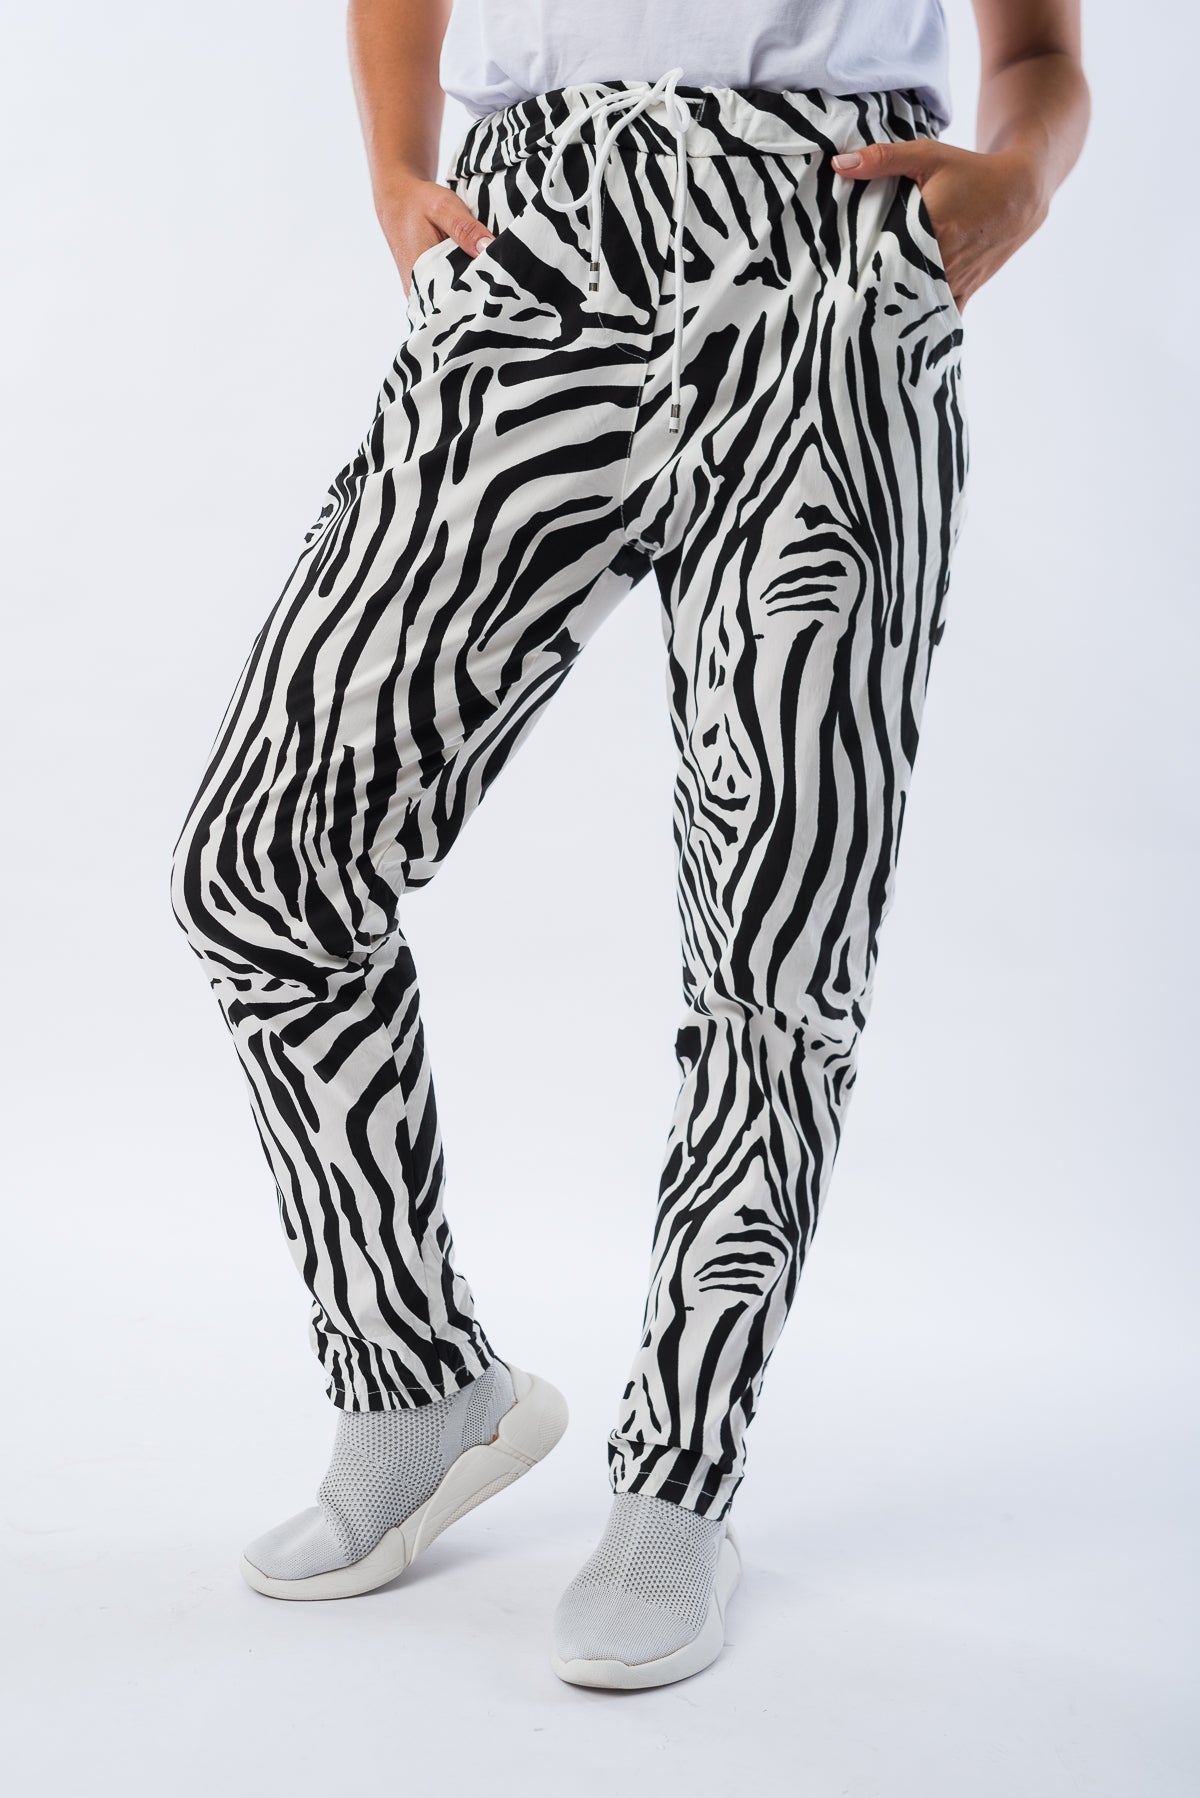 Babucha Zebra Negra